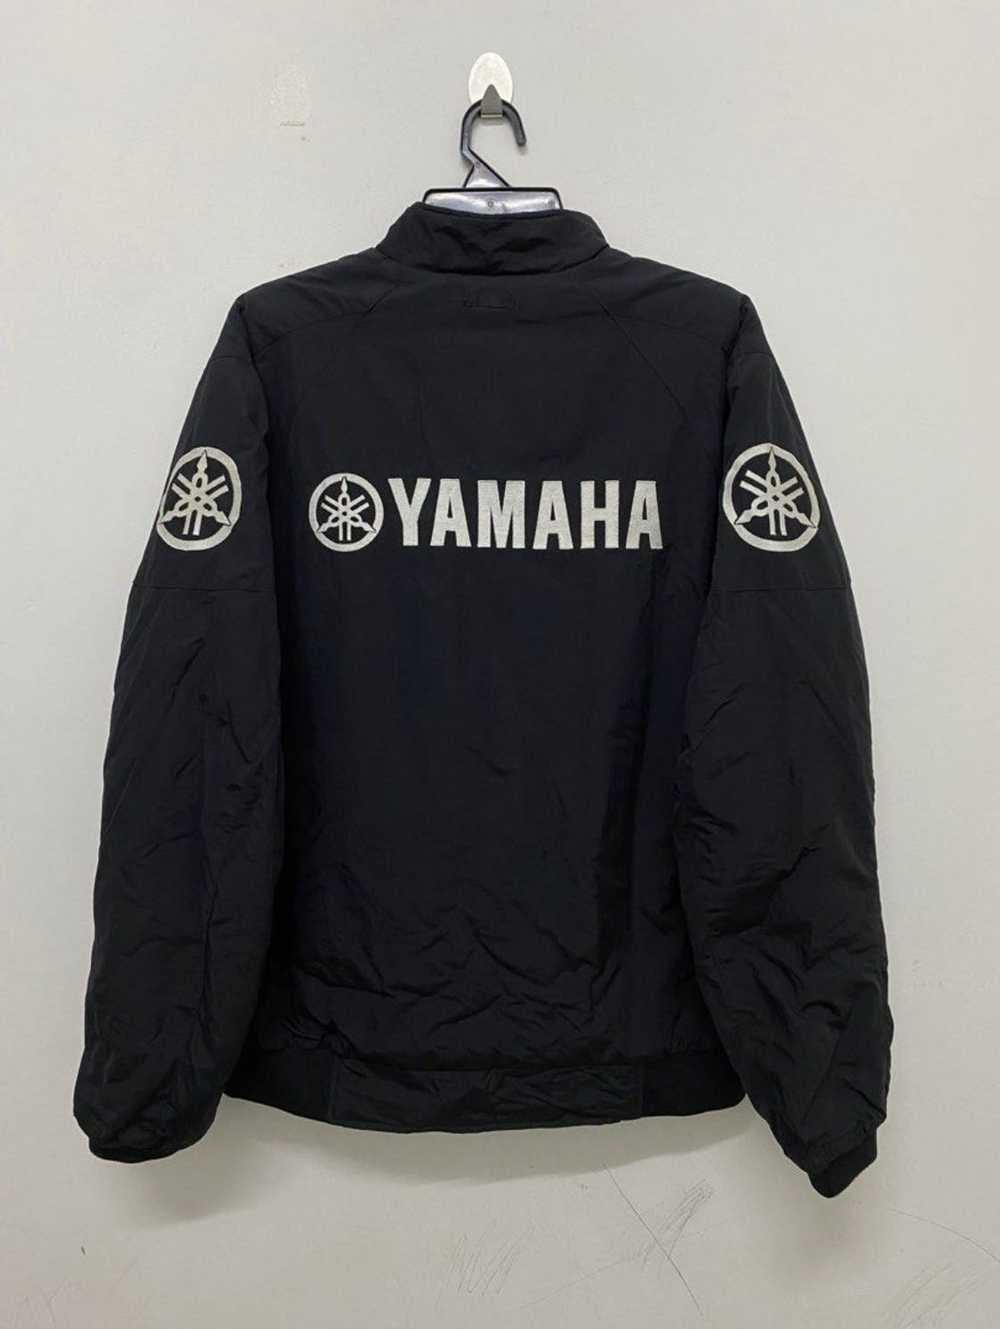 Racing × Sports Specialties × Yamaha YAMAHA jacket - image 2